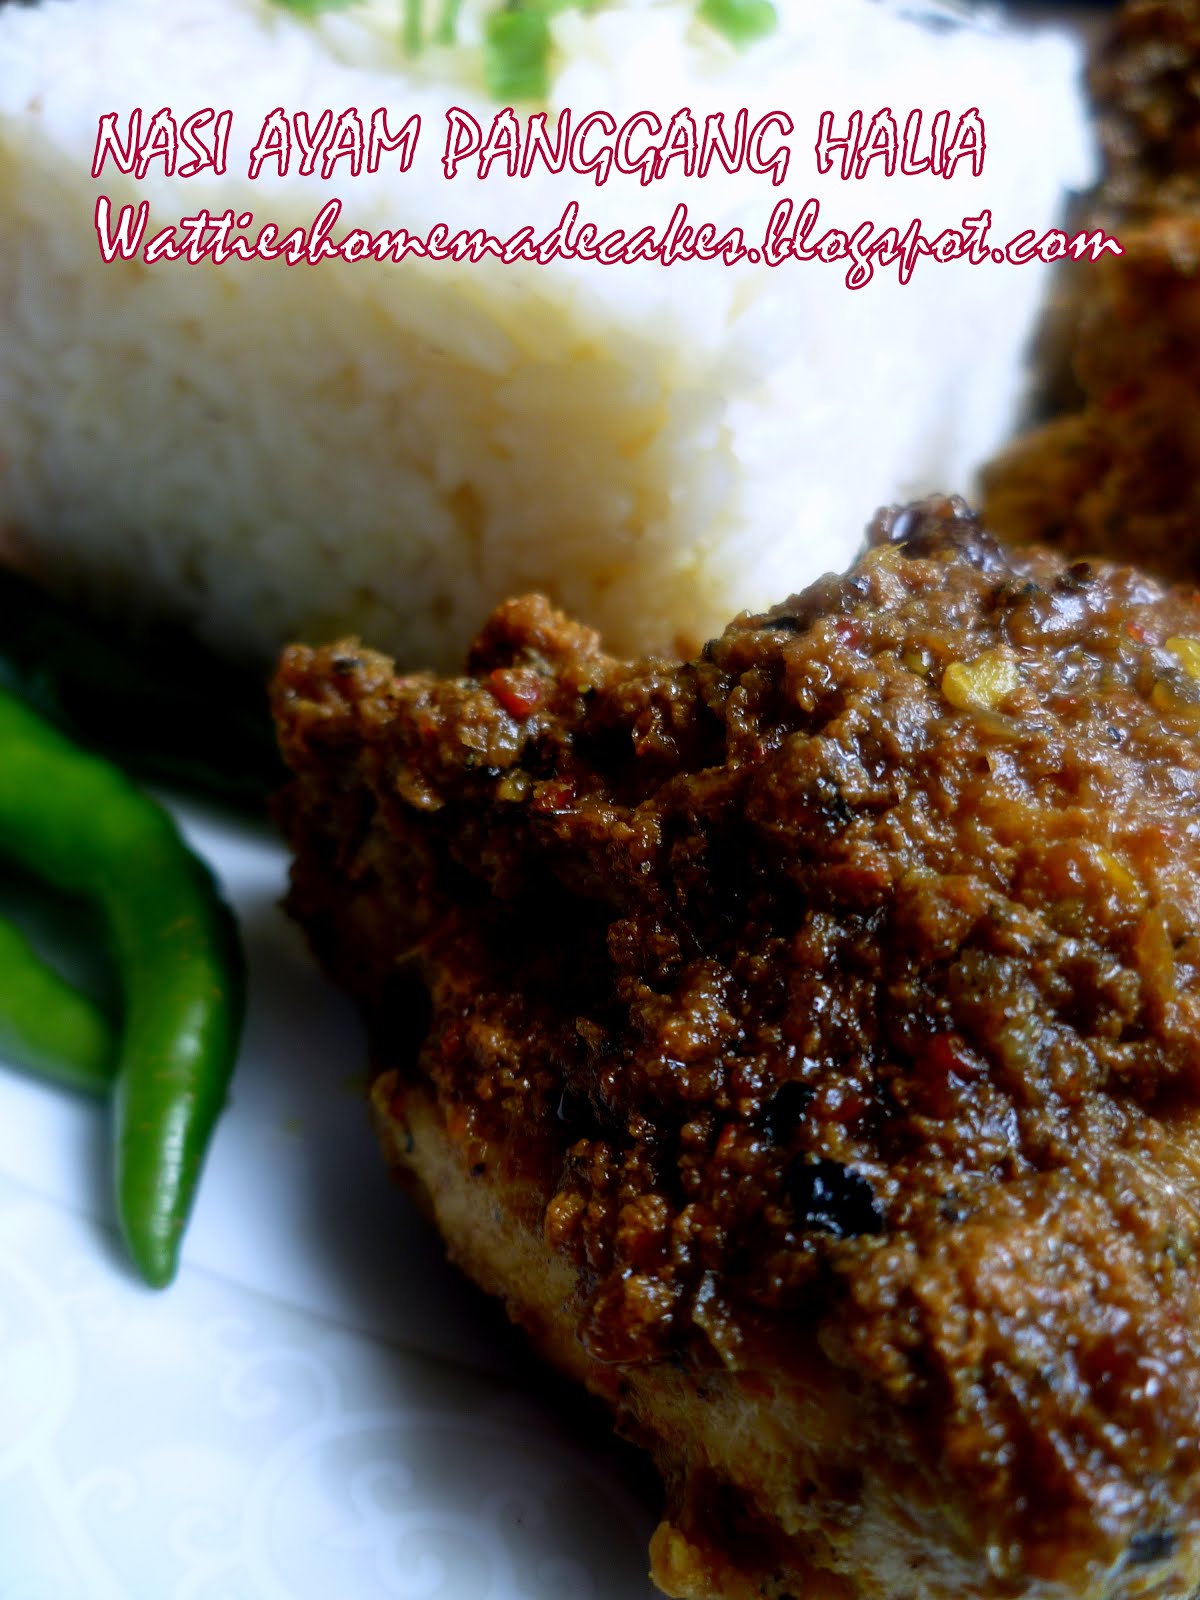 Wattie's HomeMade: Nasi Ayam Panggang Halia